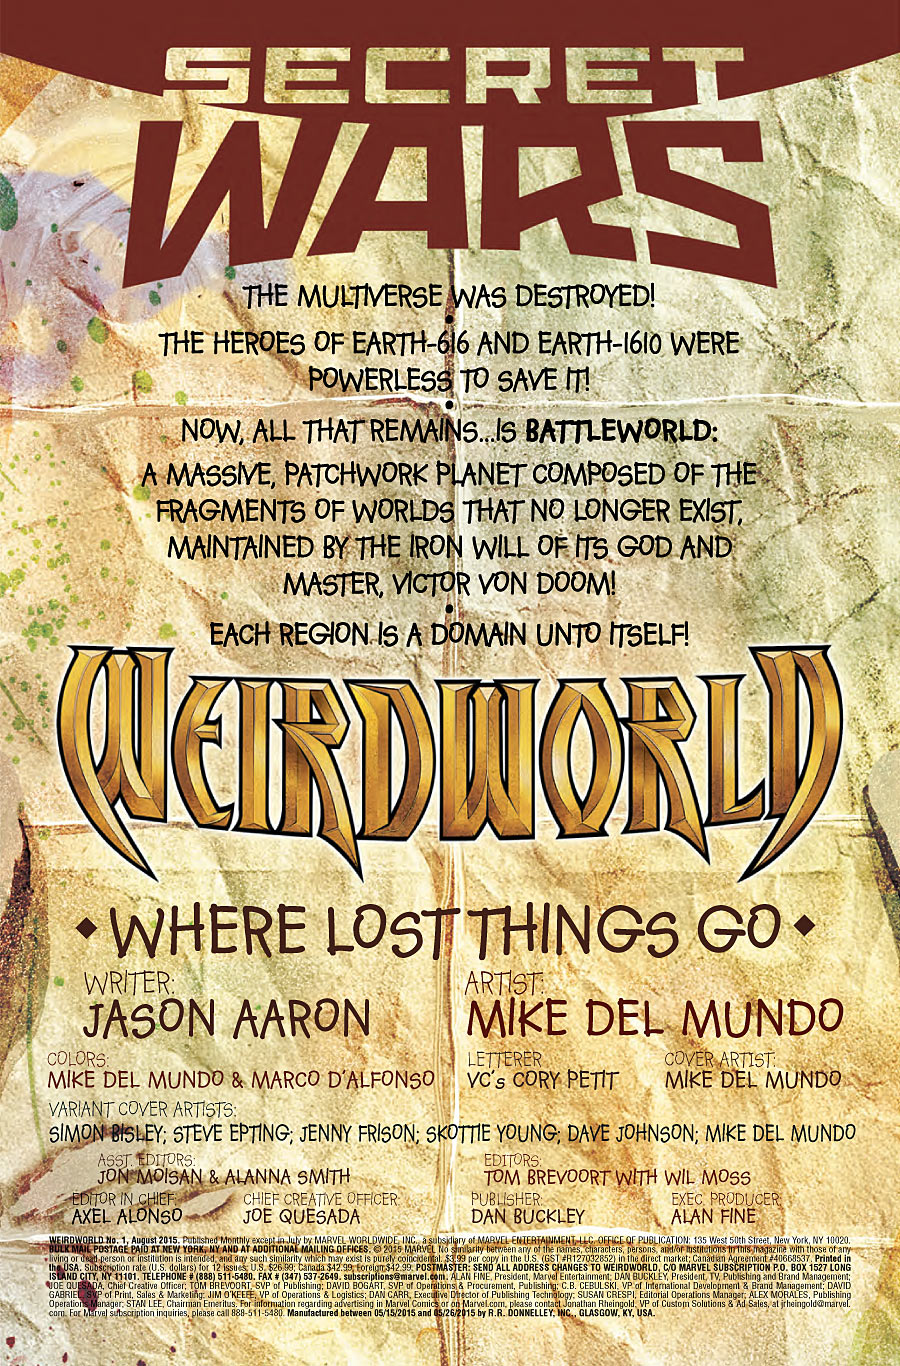 Weirdworld #1